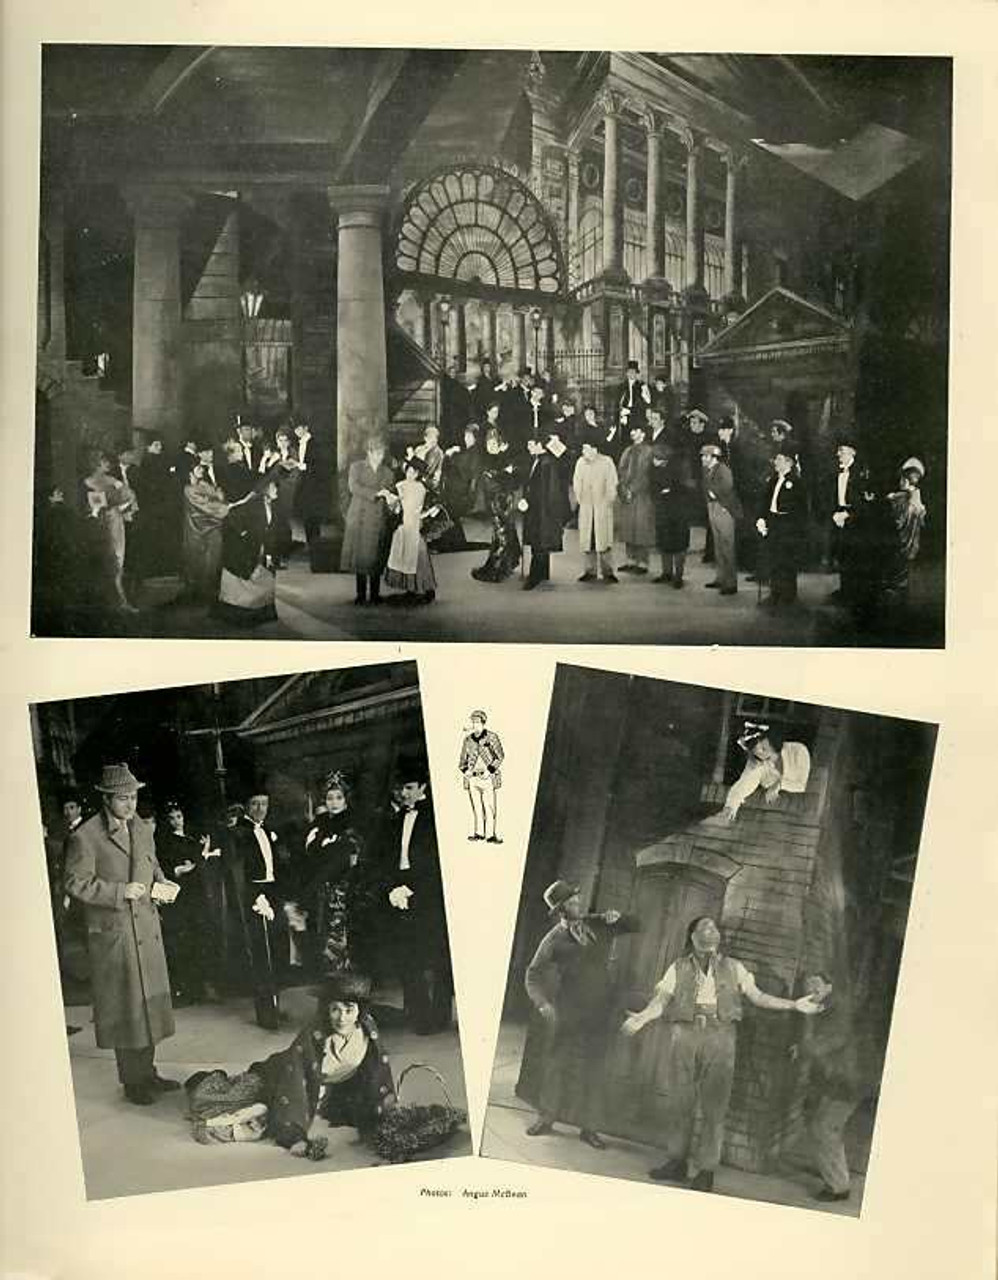 Lerner & Loewe's My Fair Lady, Altria Theater